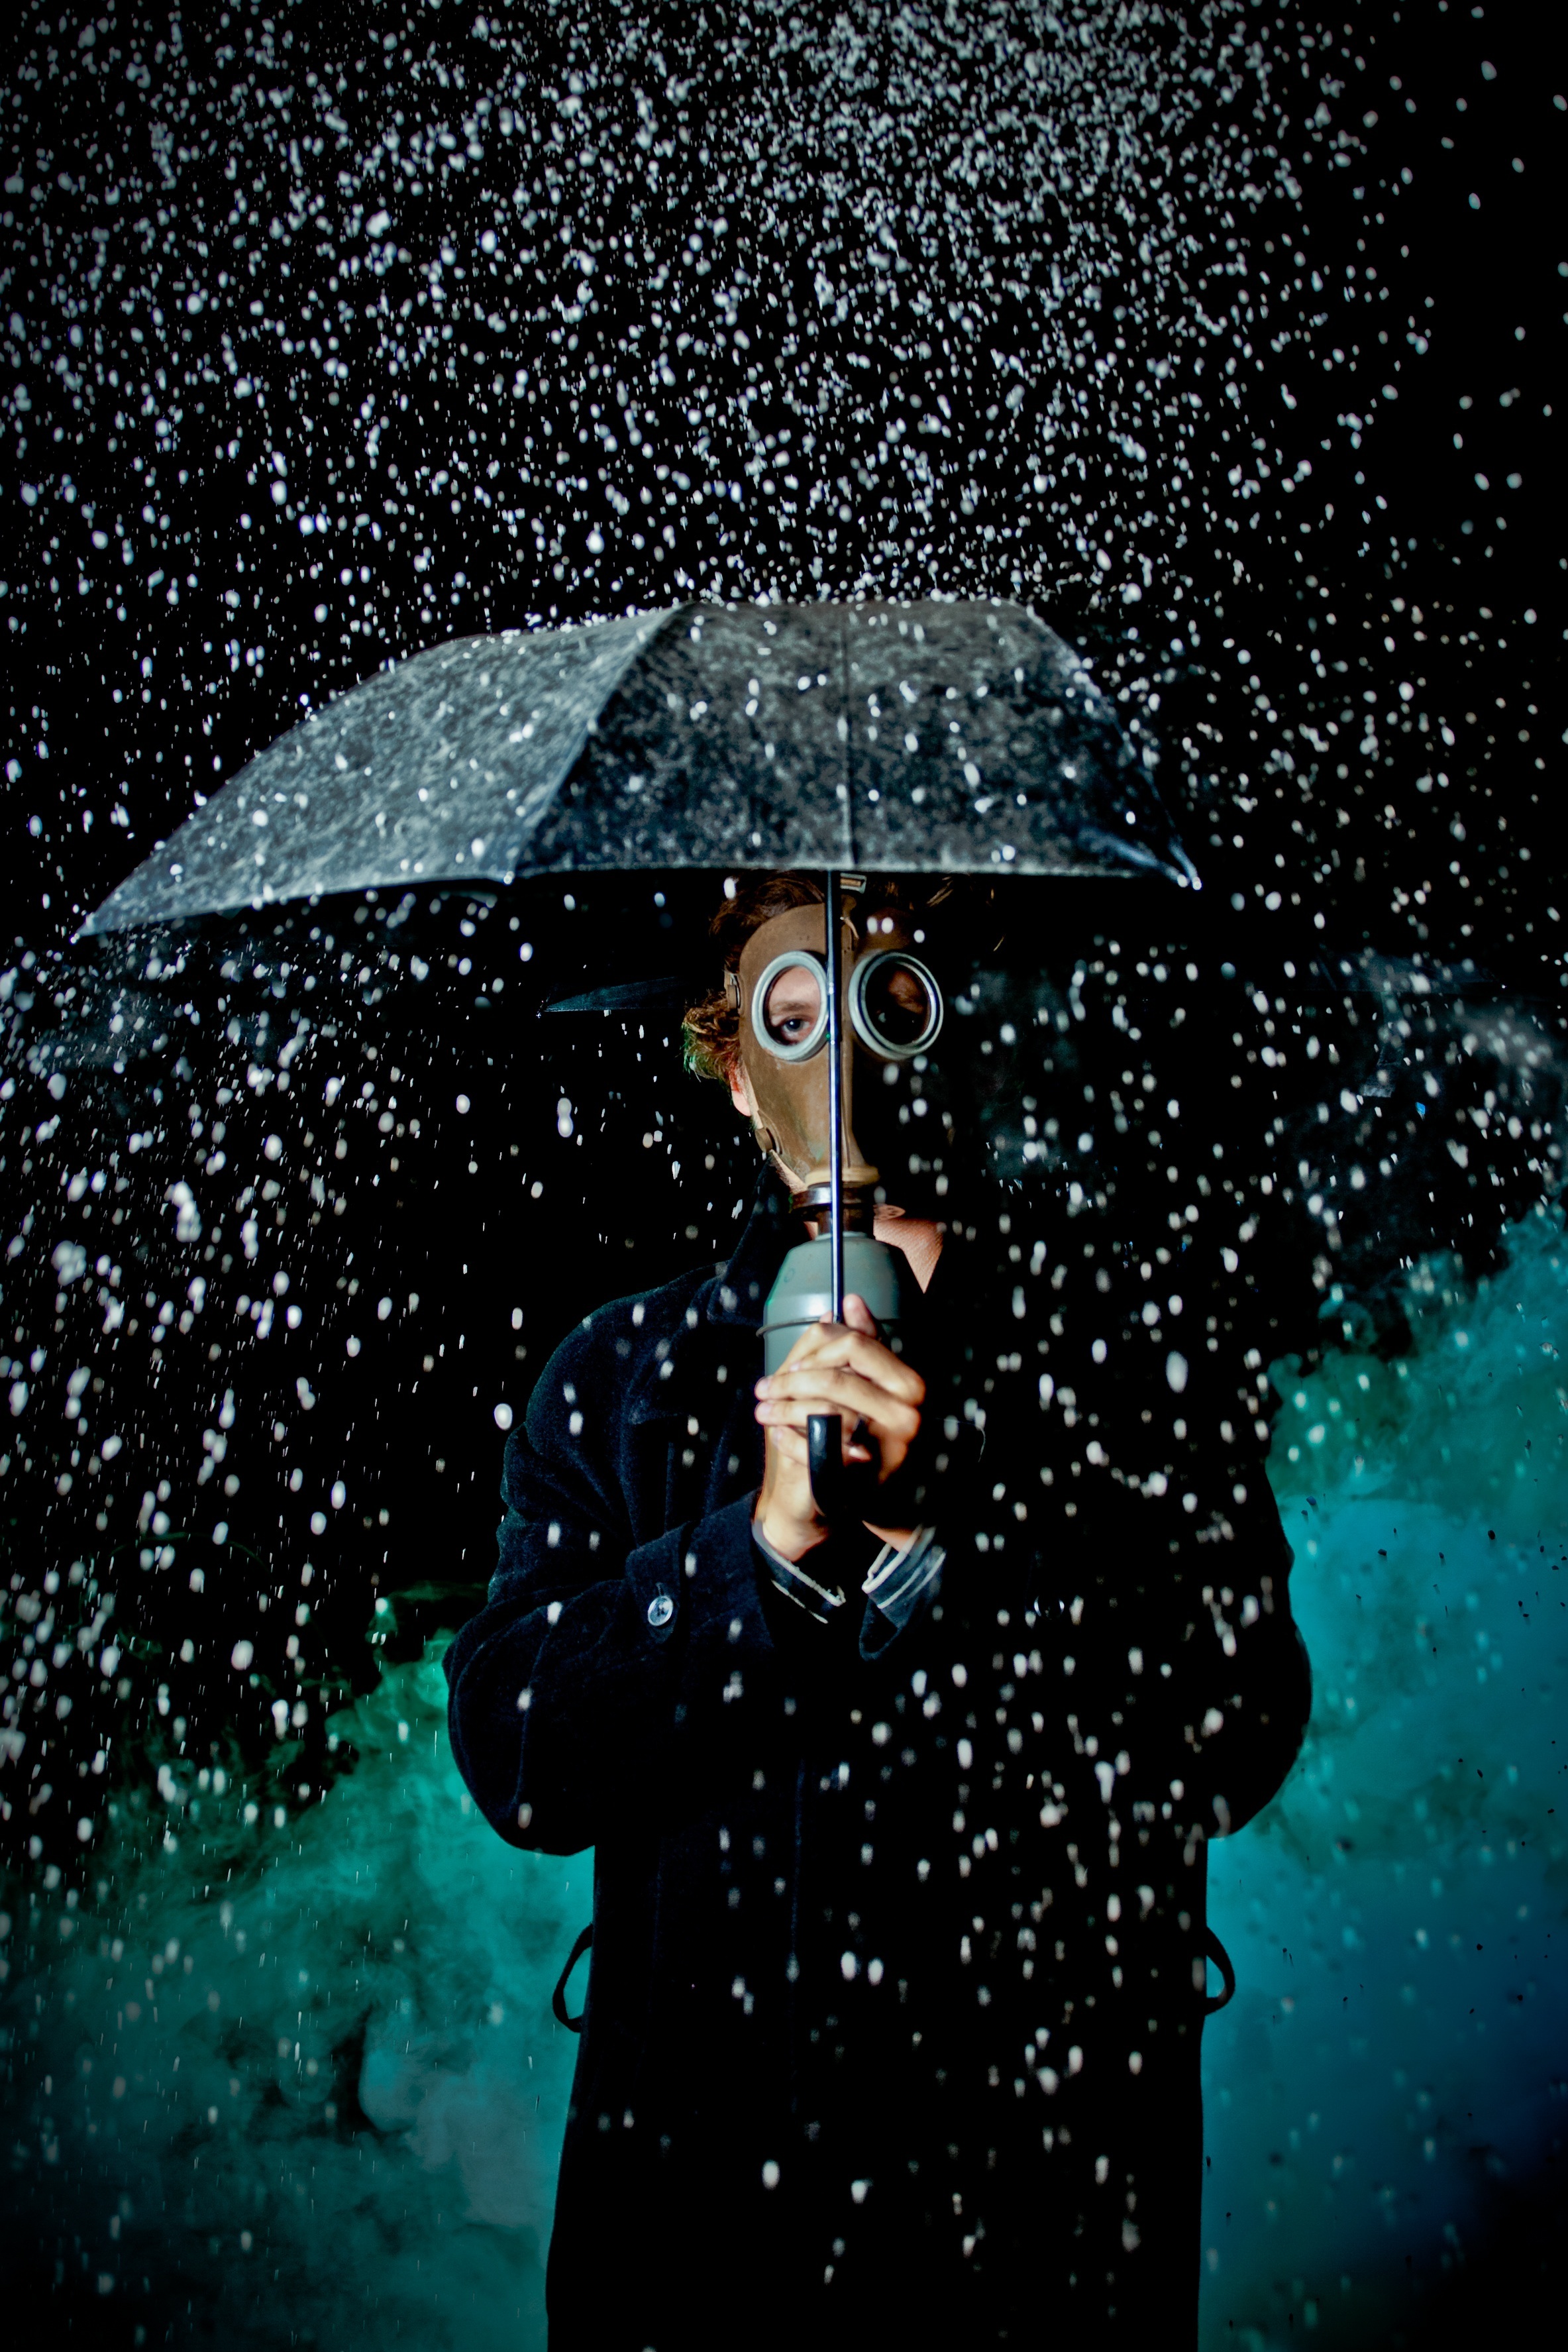 rain, miscellanea, miscellaneous, mask, gas mask, human, person, umbrella, mood